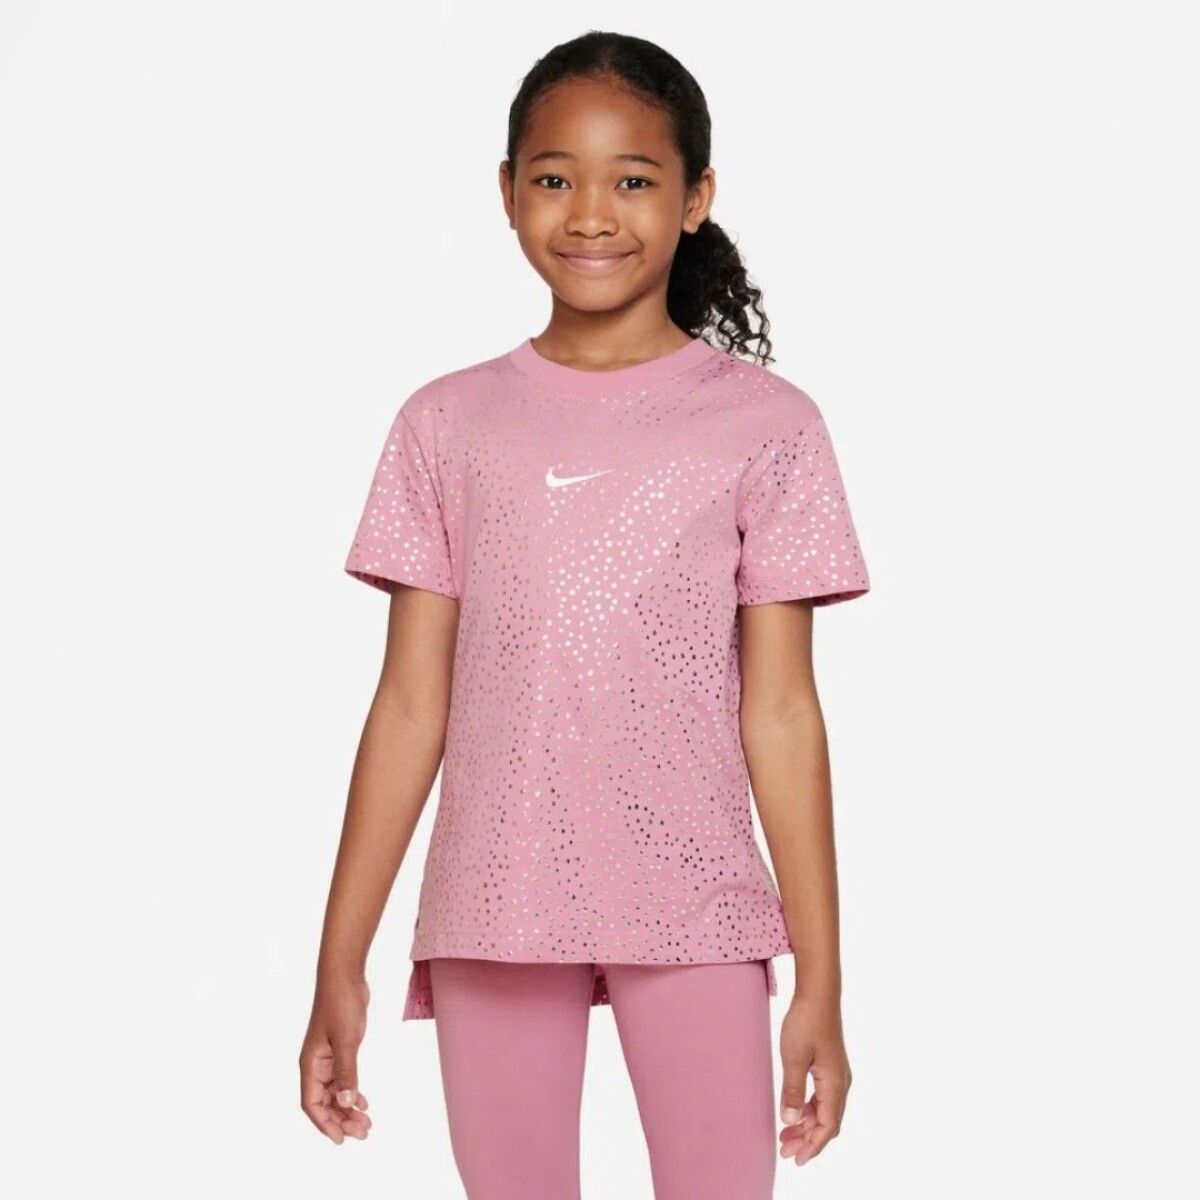 Remera Nike Moda Niño Tee Hilo Shine Aop Elemental Pink - S/C 